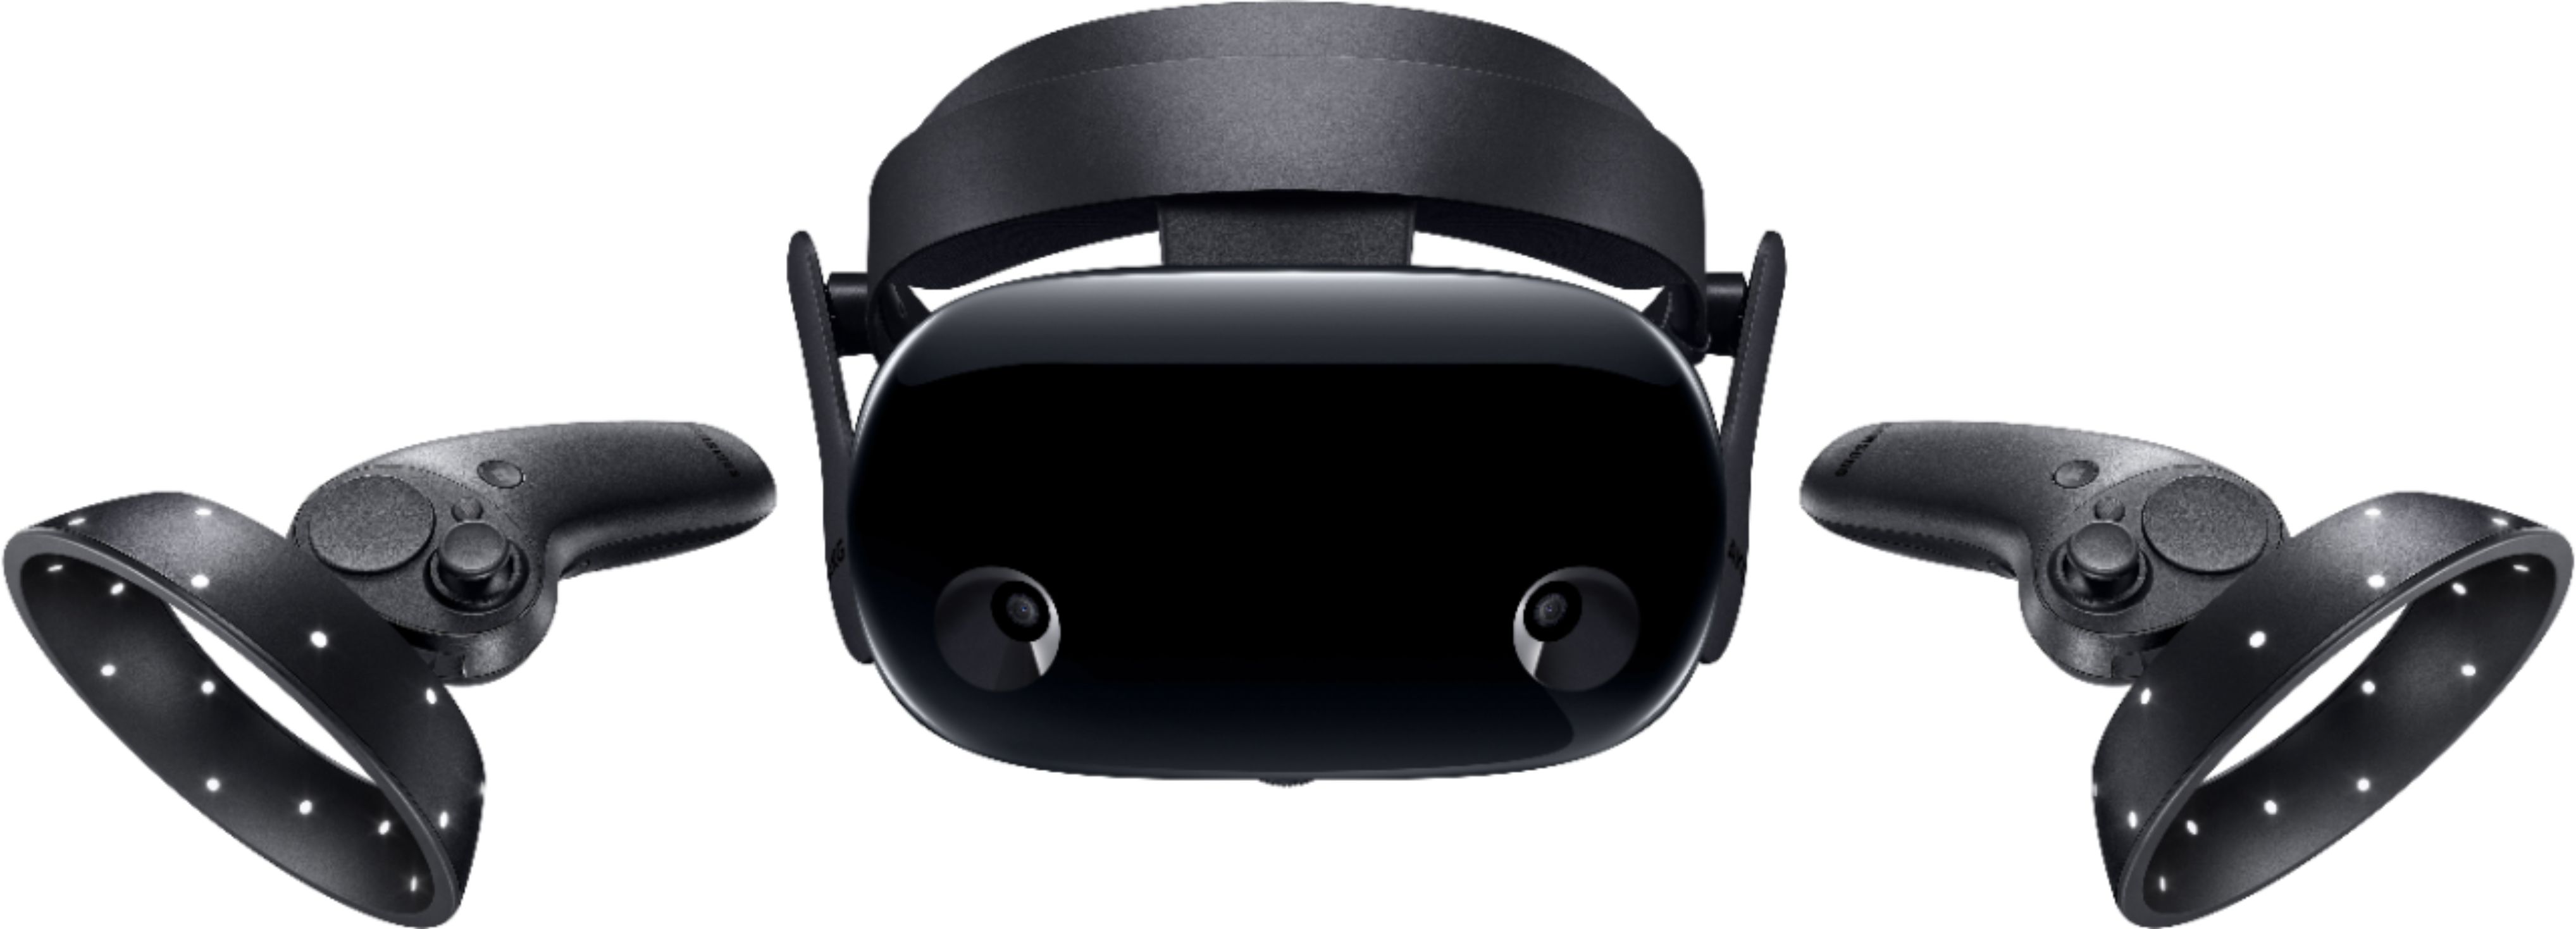 Best Buy: Samsung HMD Odyssey Virtual Reality Headset for 